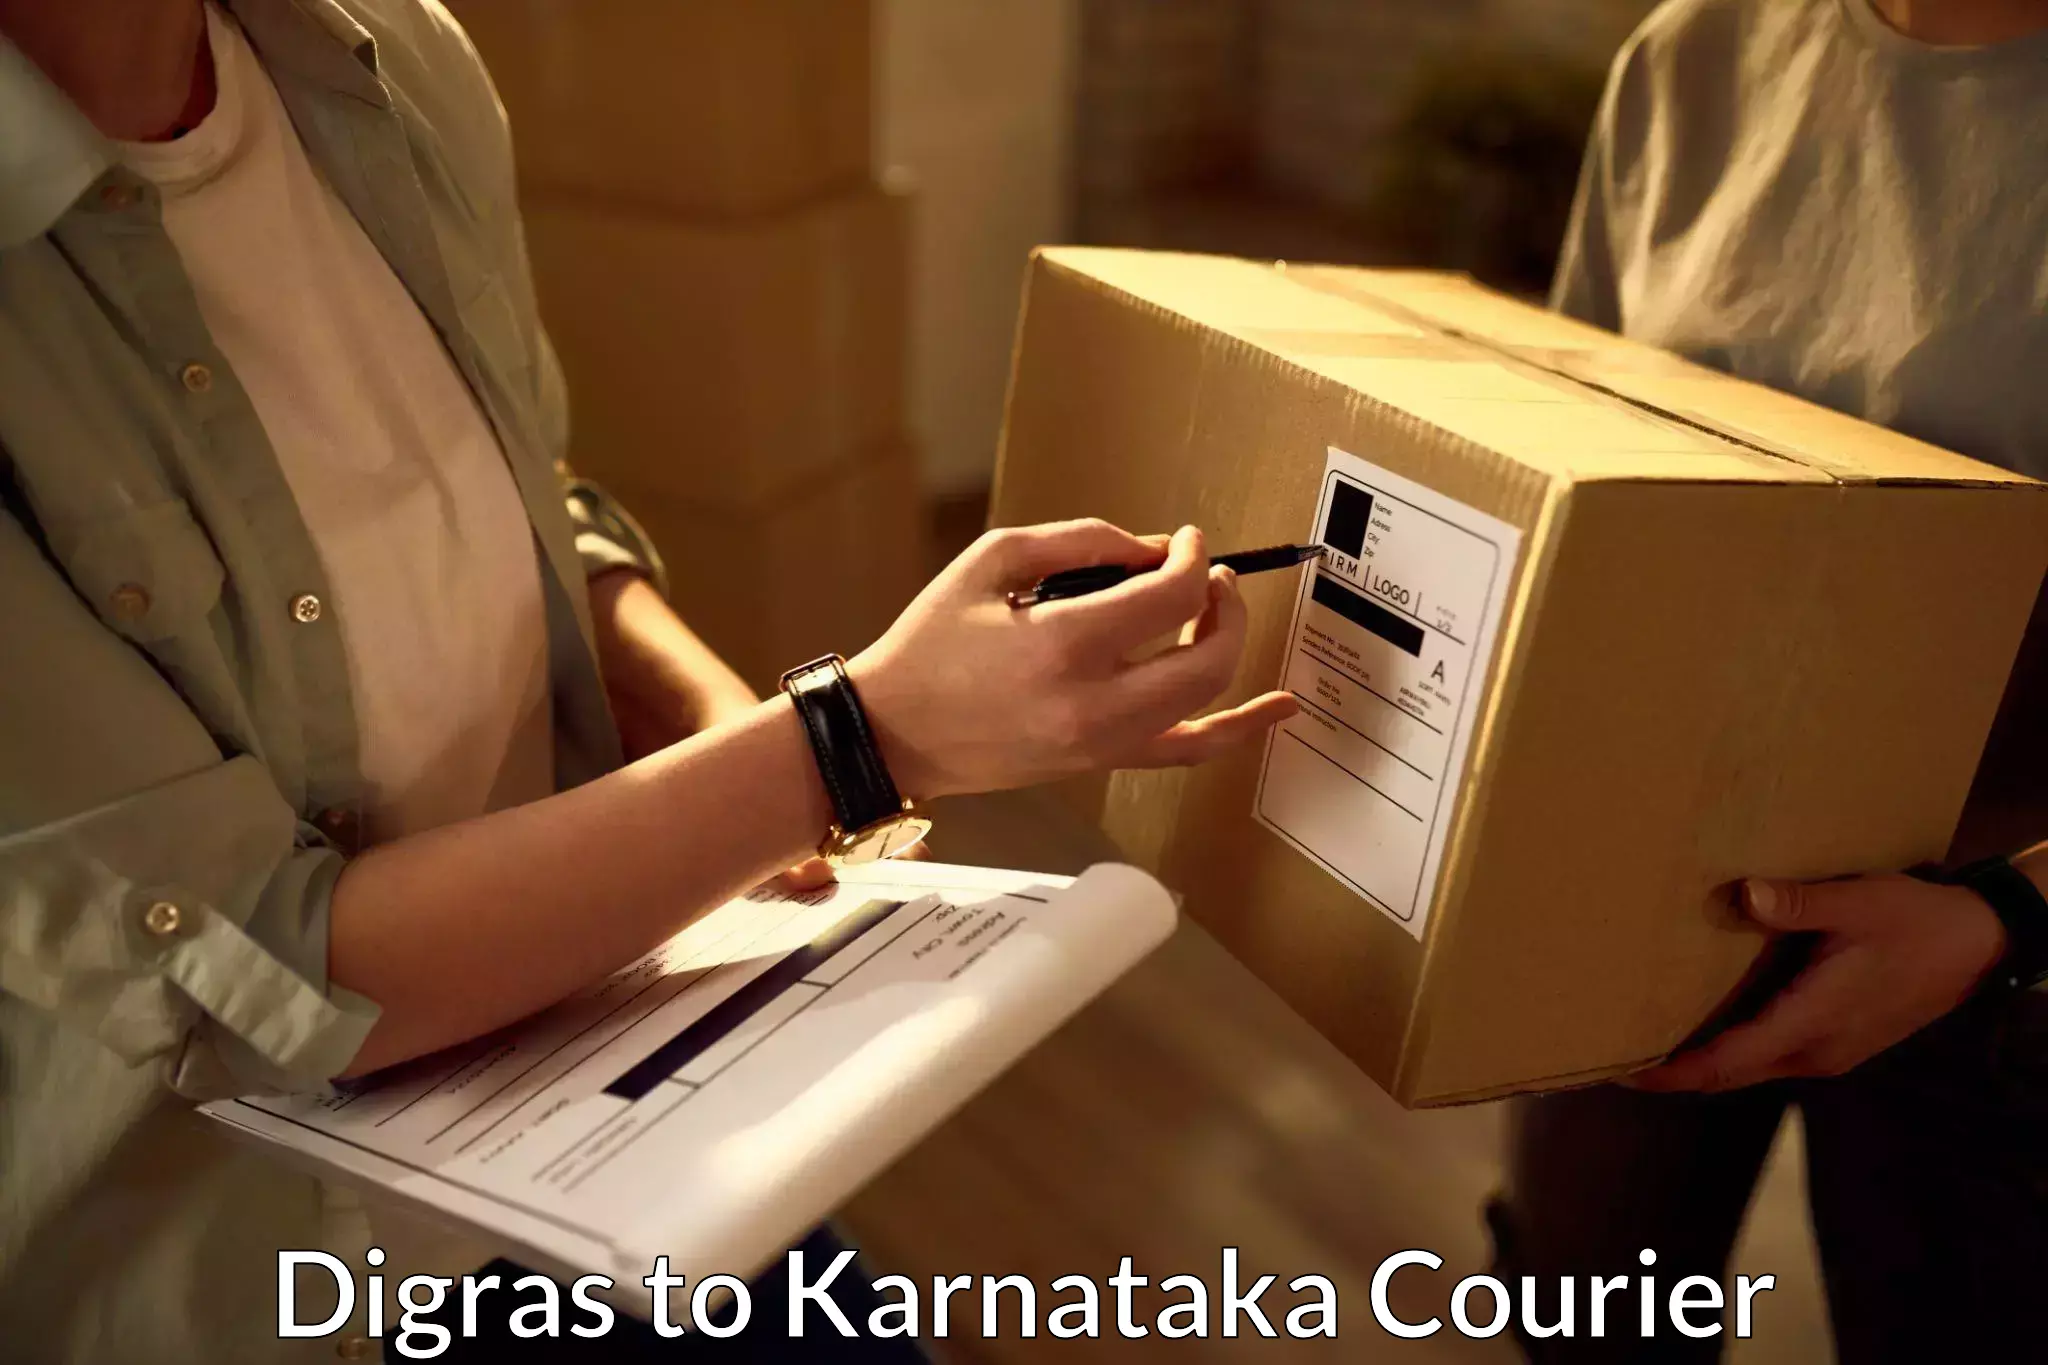 User-friendly delivery service Digras to Ittigi